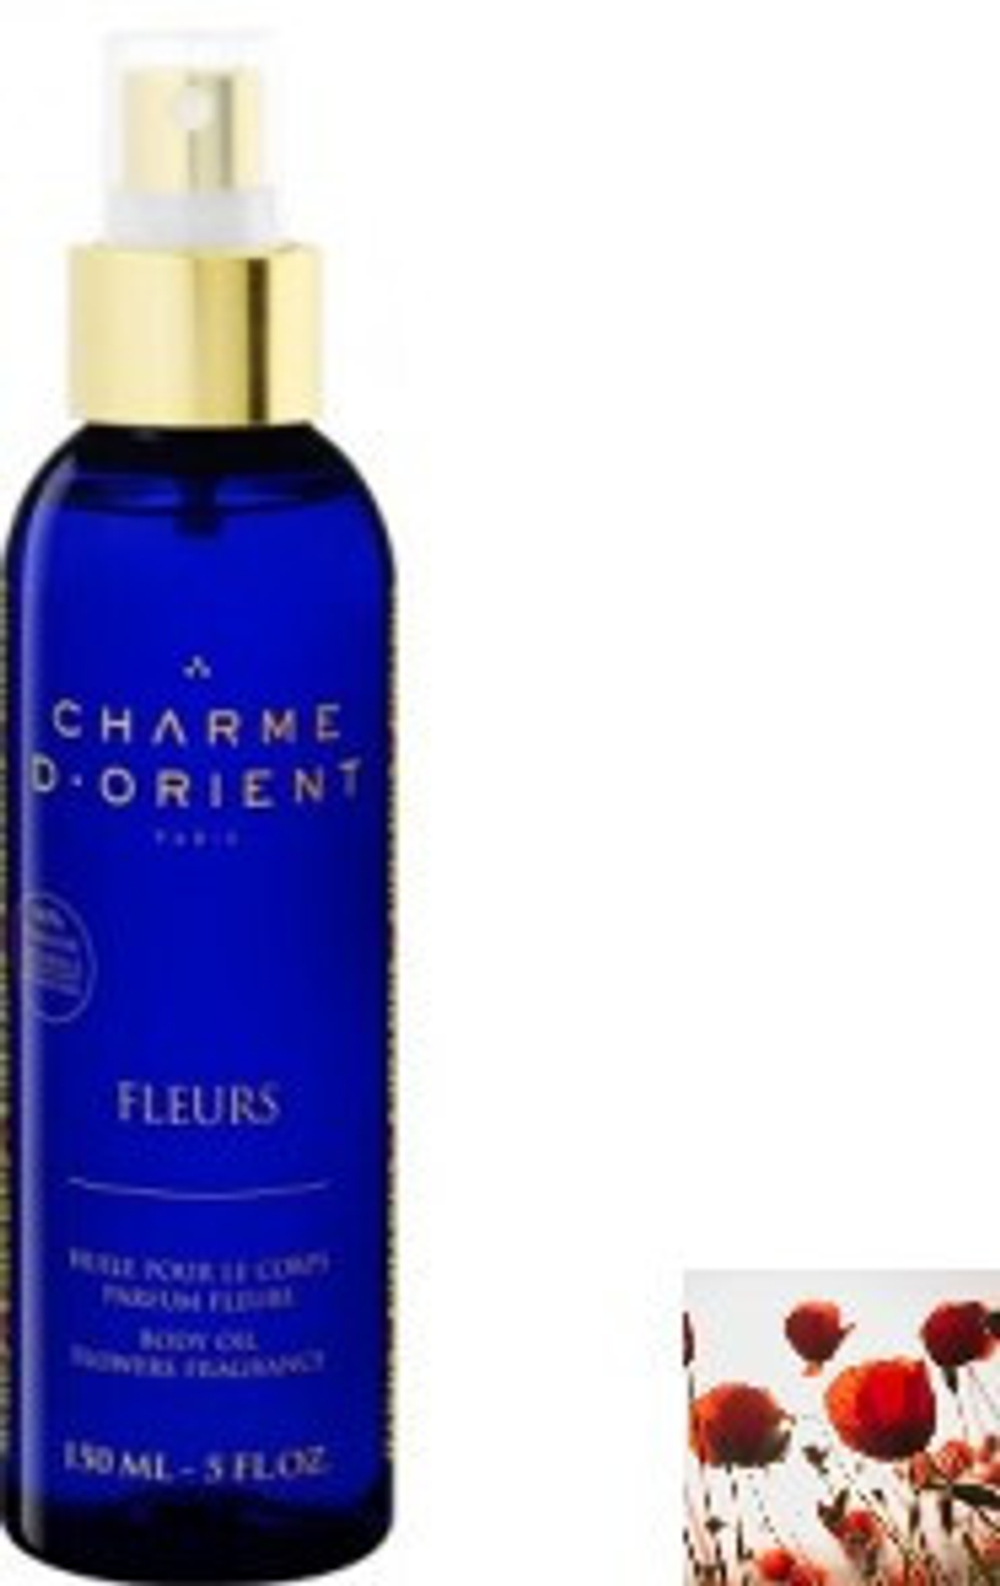 CHARME D'ORIENT Масло для тела с цветочным ароматом Massage Oil Flowers Fragrance (Шарм ди Ориент) 150 мл